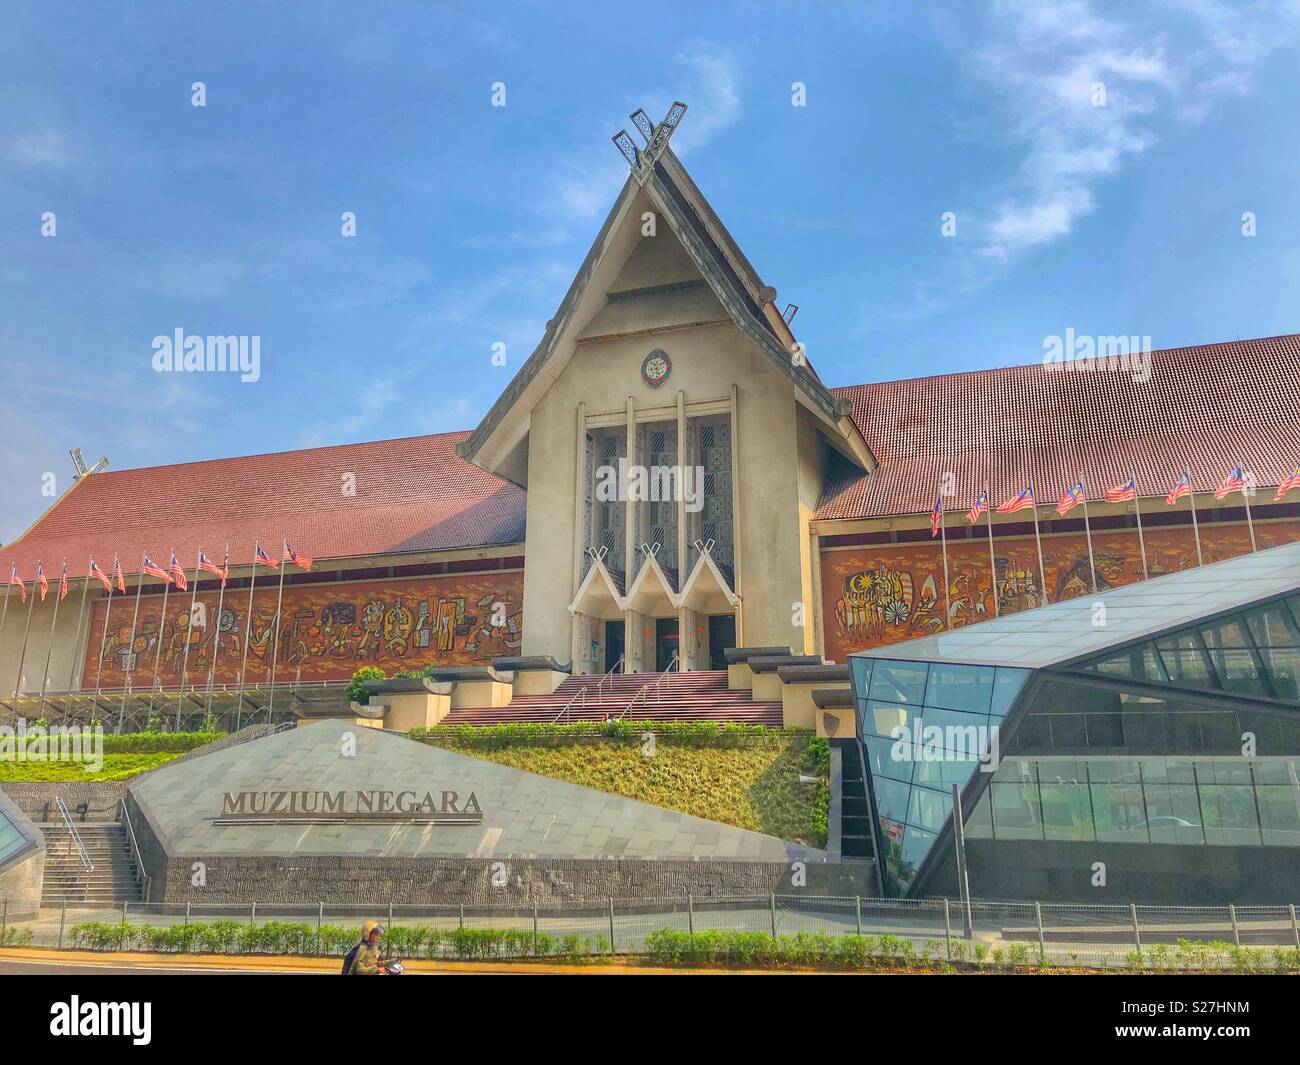 Muzium Negara, National Museum, Kuala Lumpur, Malaysia. Stockfoto